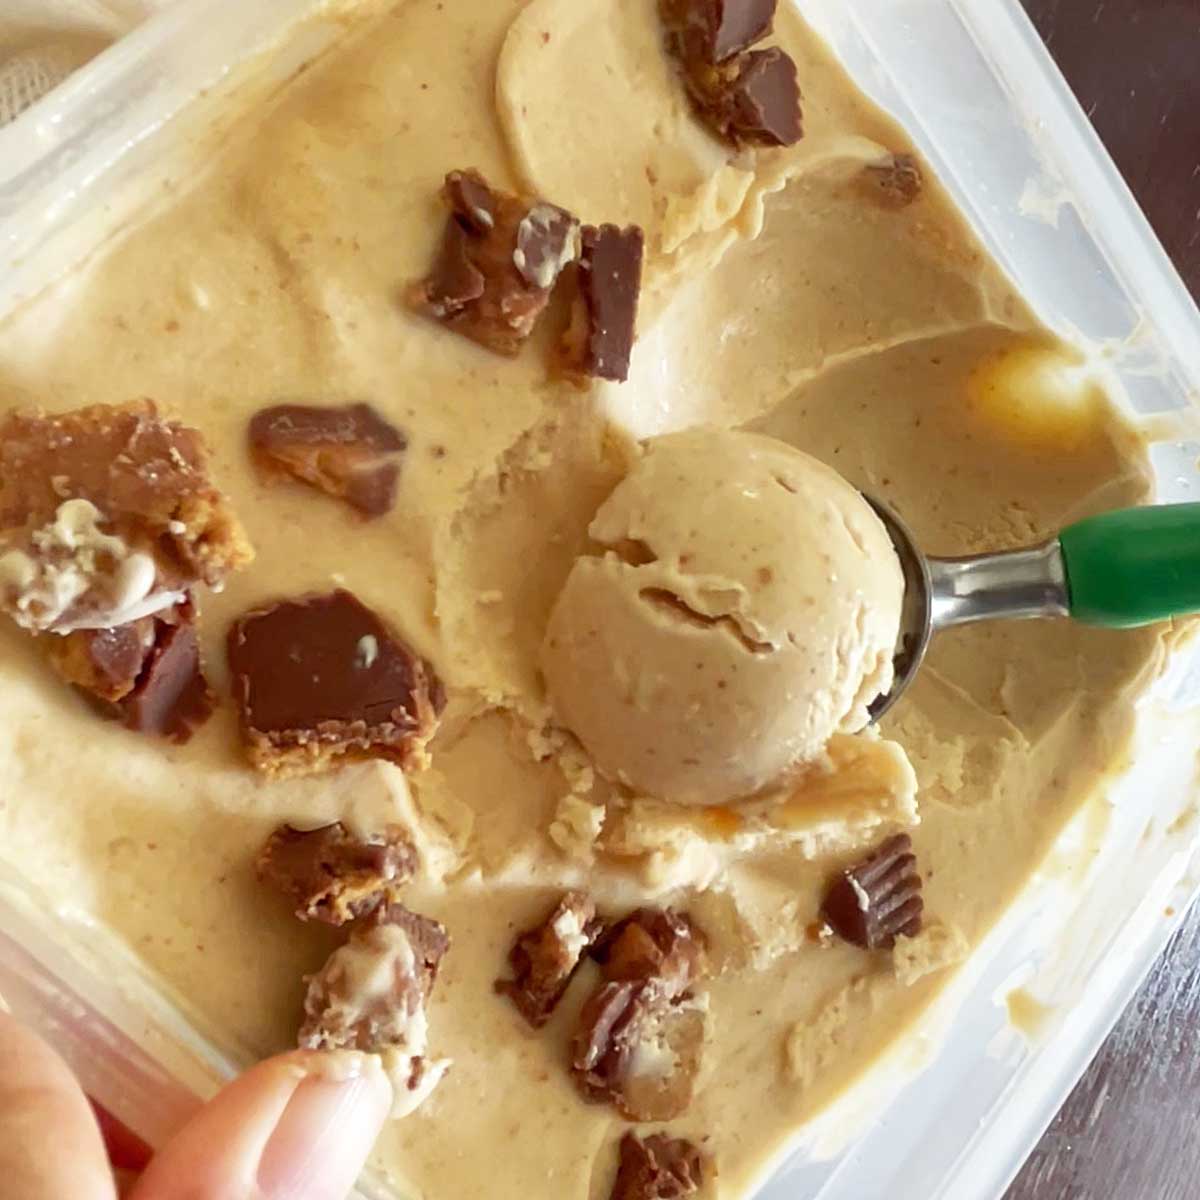 Peanut butter ice cream scoop.